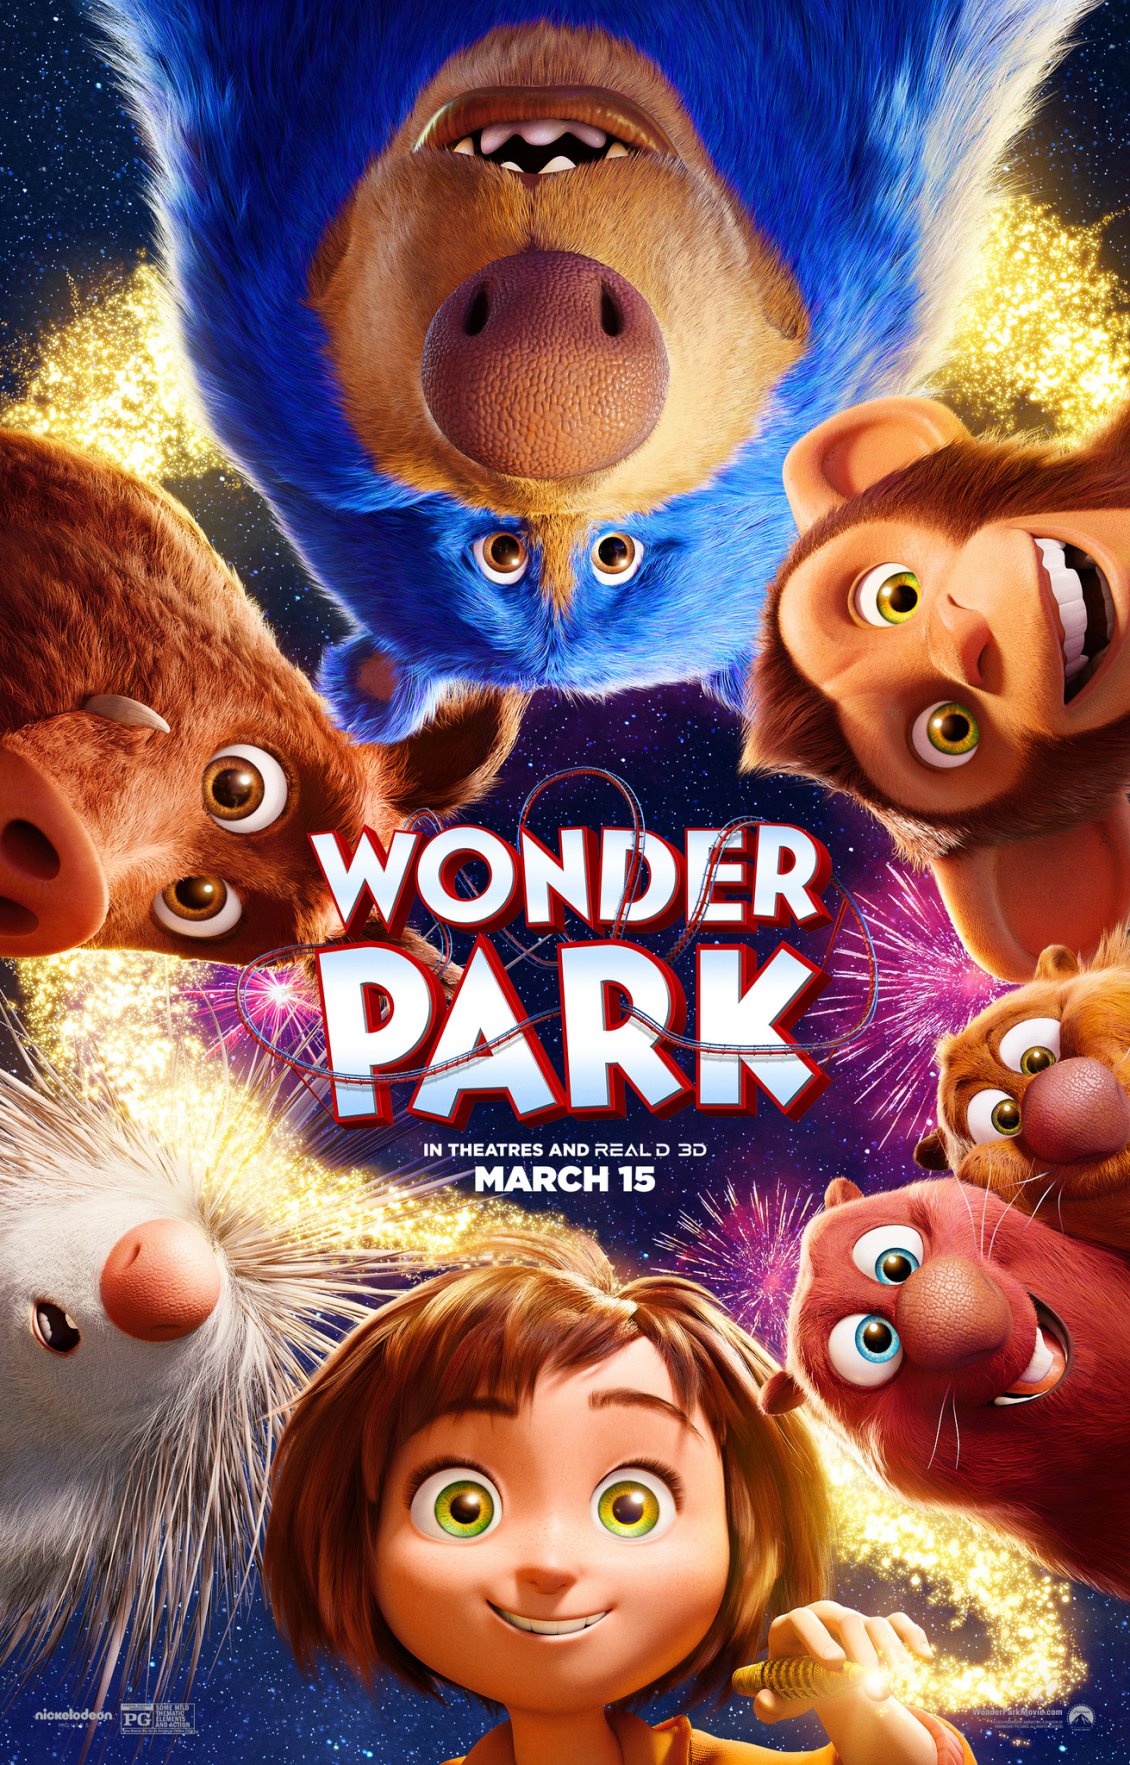 Download Wallpaper Wonder Park in cinemas since March 15 - Happy kids movie